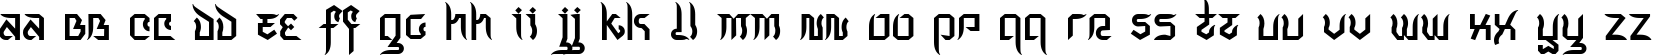 Пример написания английского алфавита шрифтом Indochine